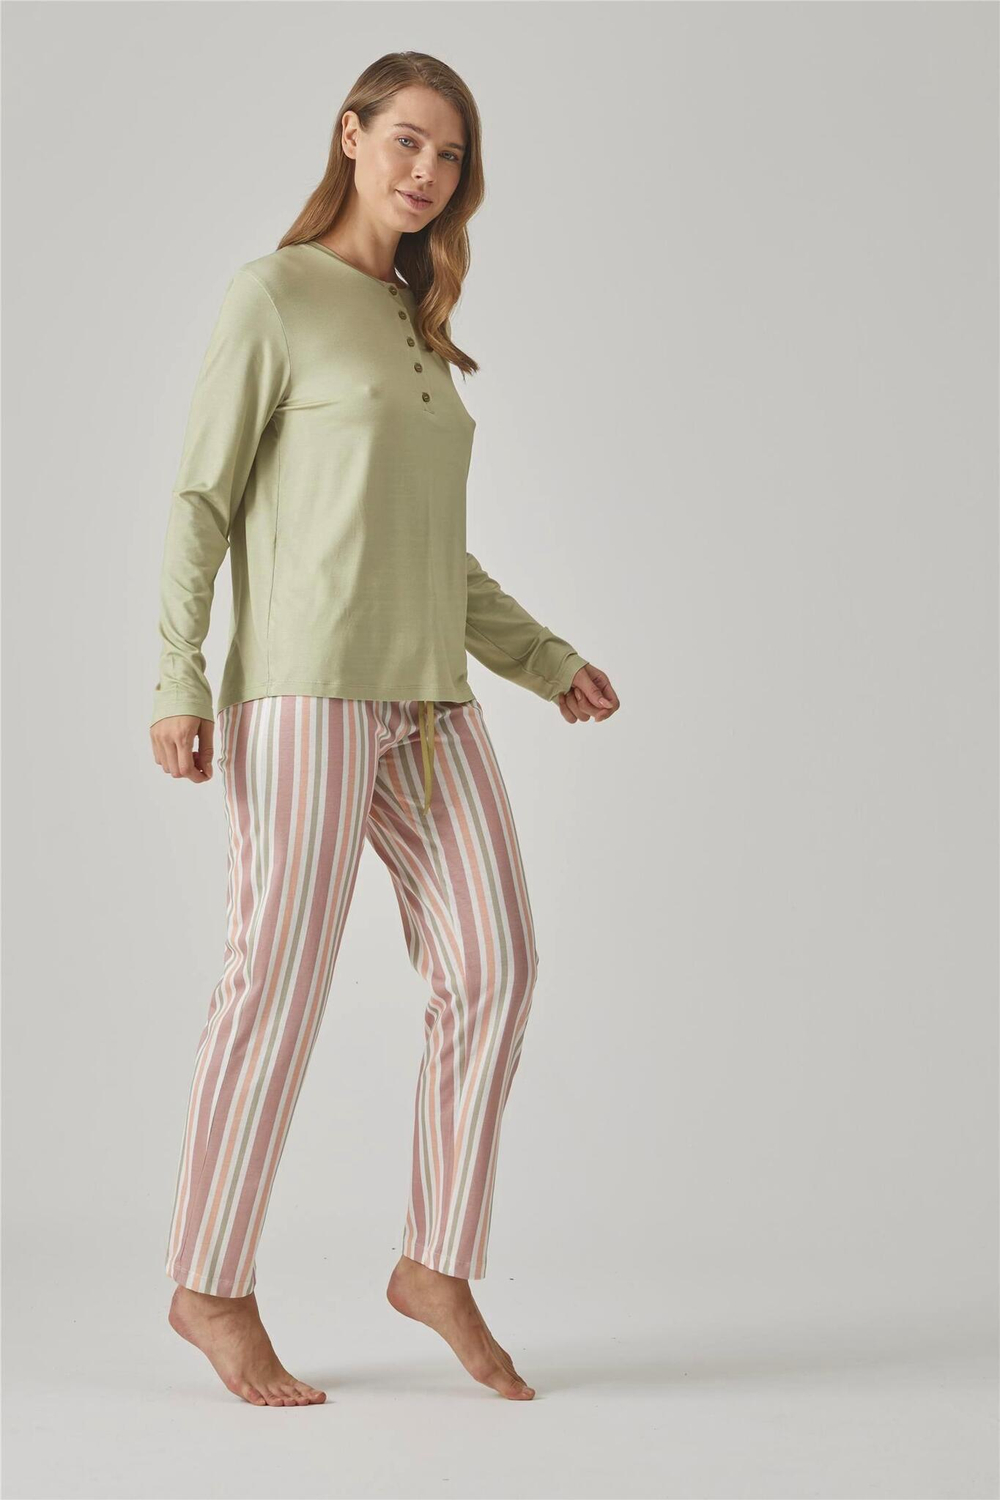 RELAX MODE - Женская пижама с брюками - 10790